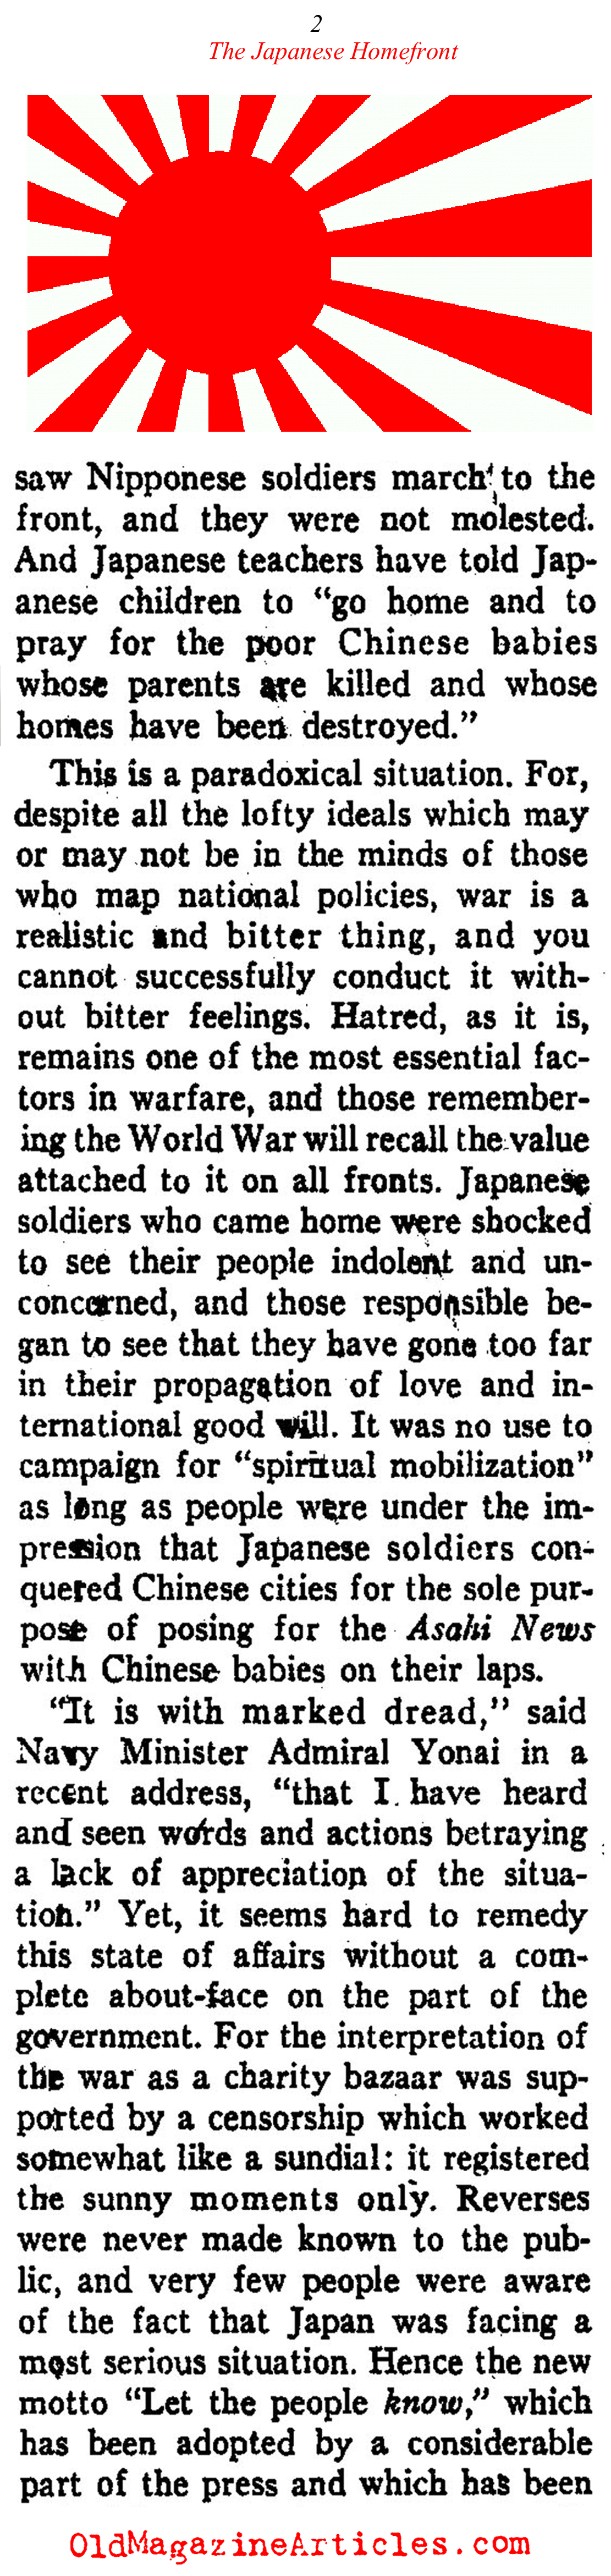 The Japanese Homefront (Ken Magazine, 1938)